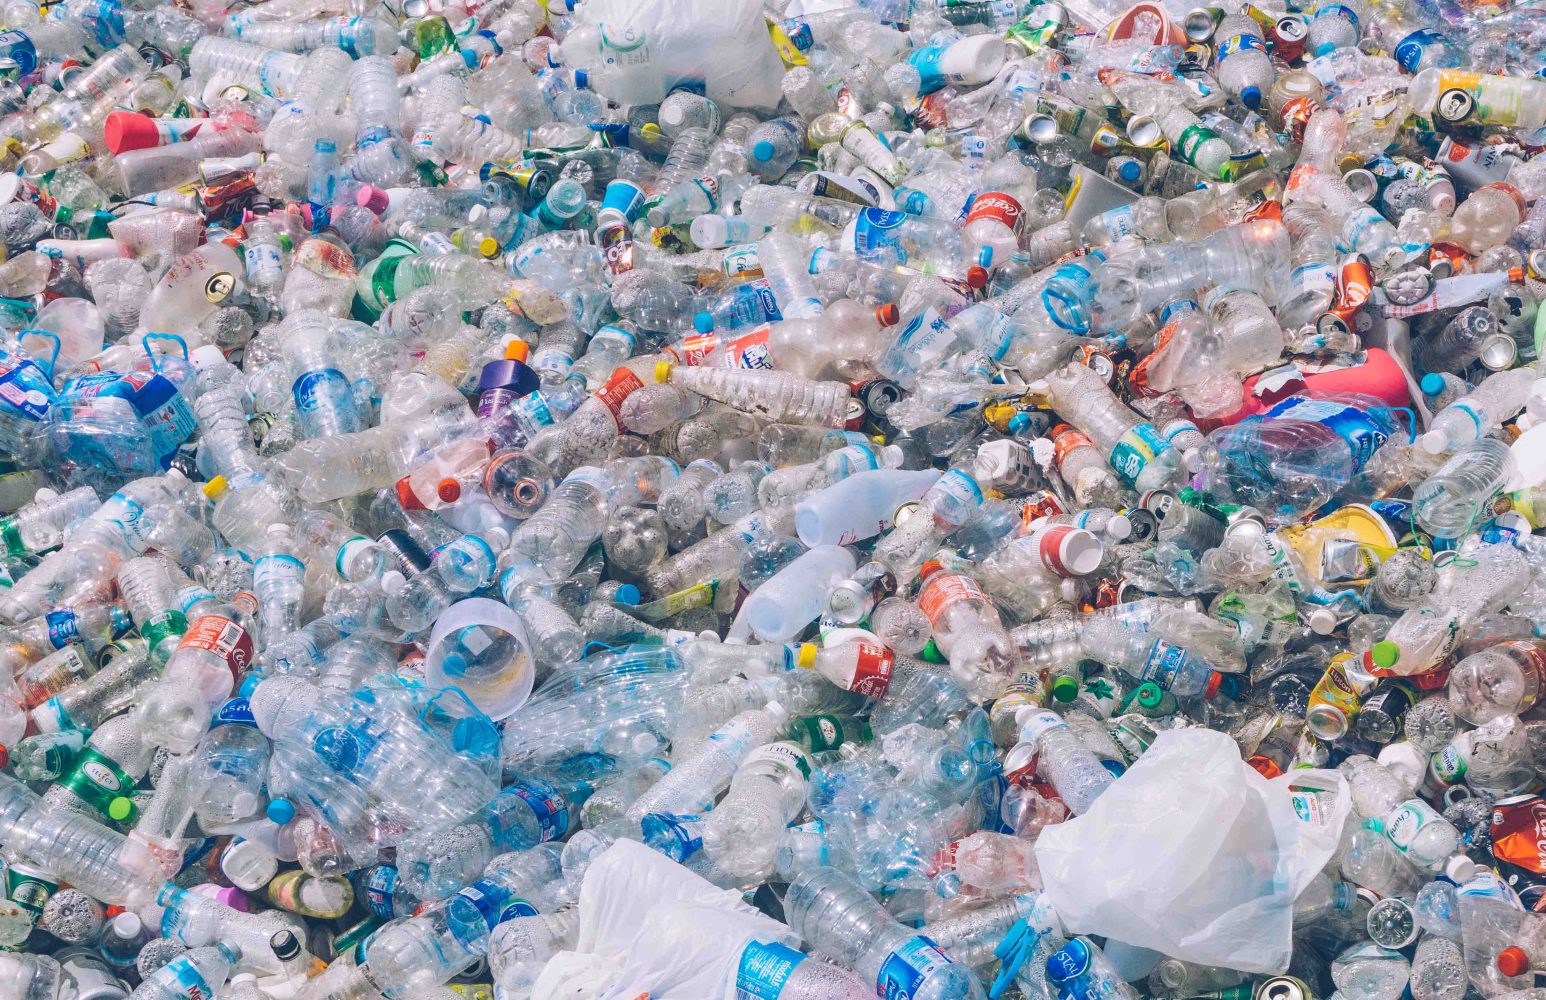 Revolutionary new plastic eats itself to biodegrade in landfills